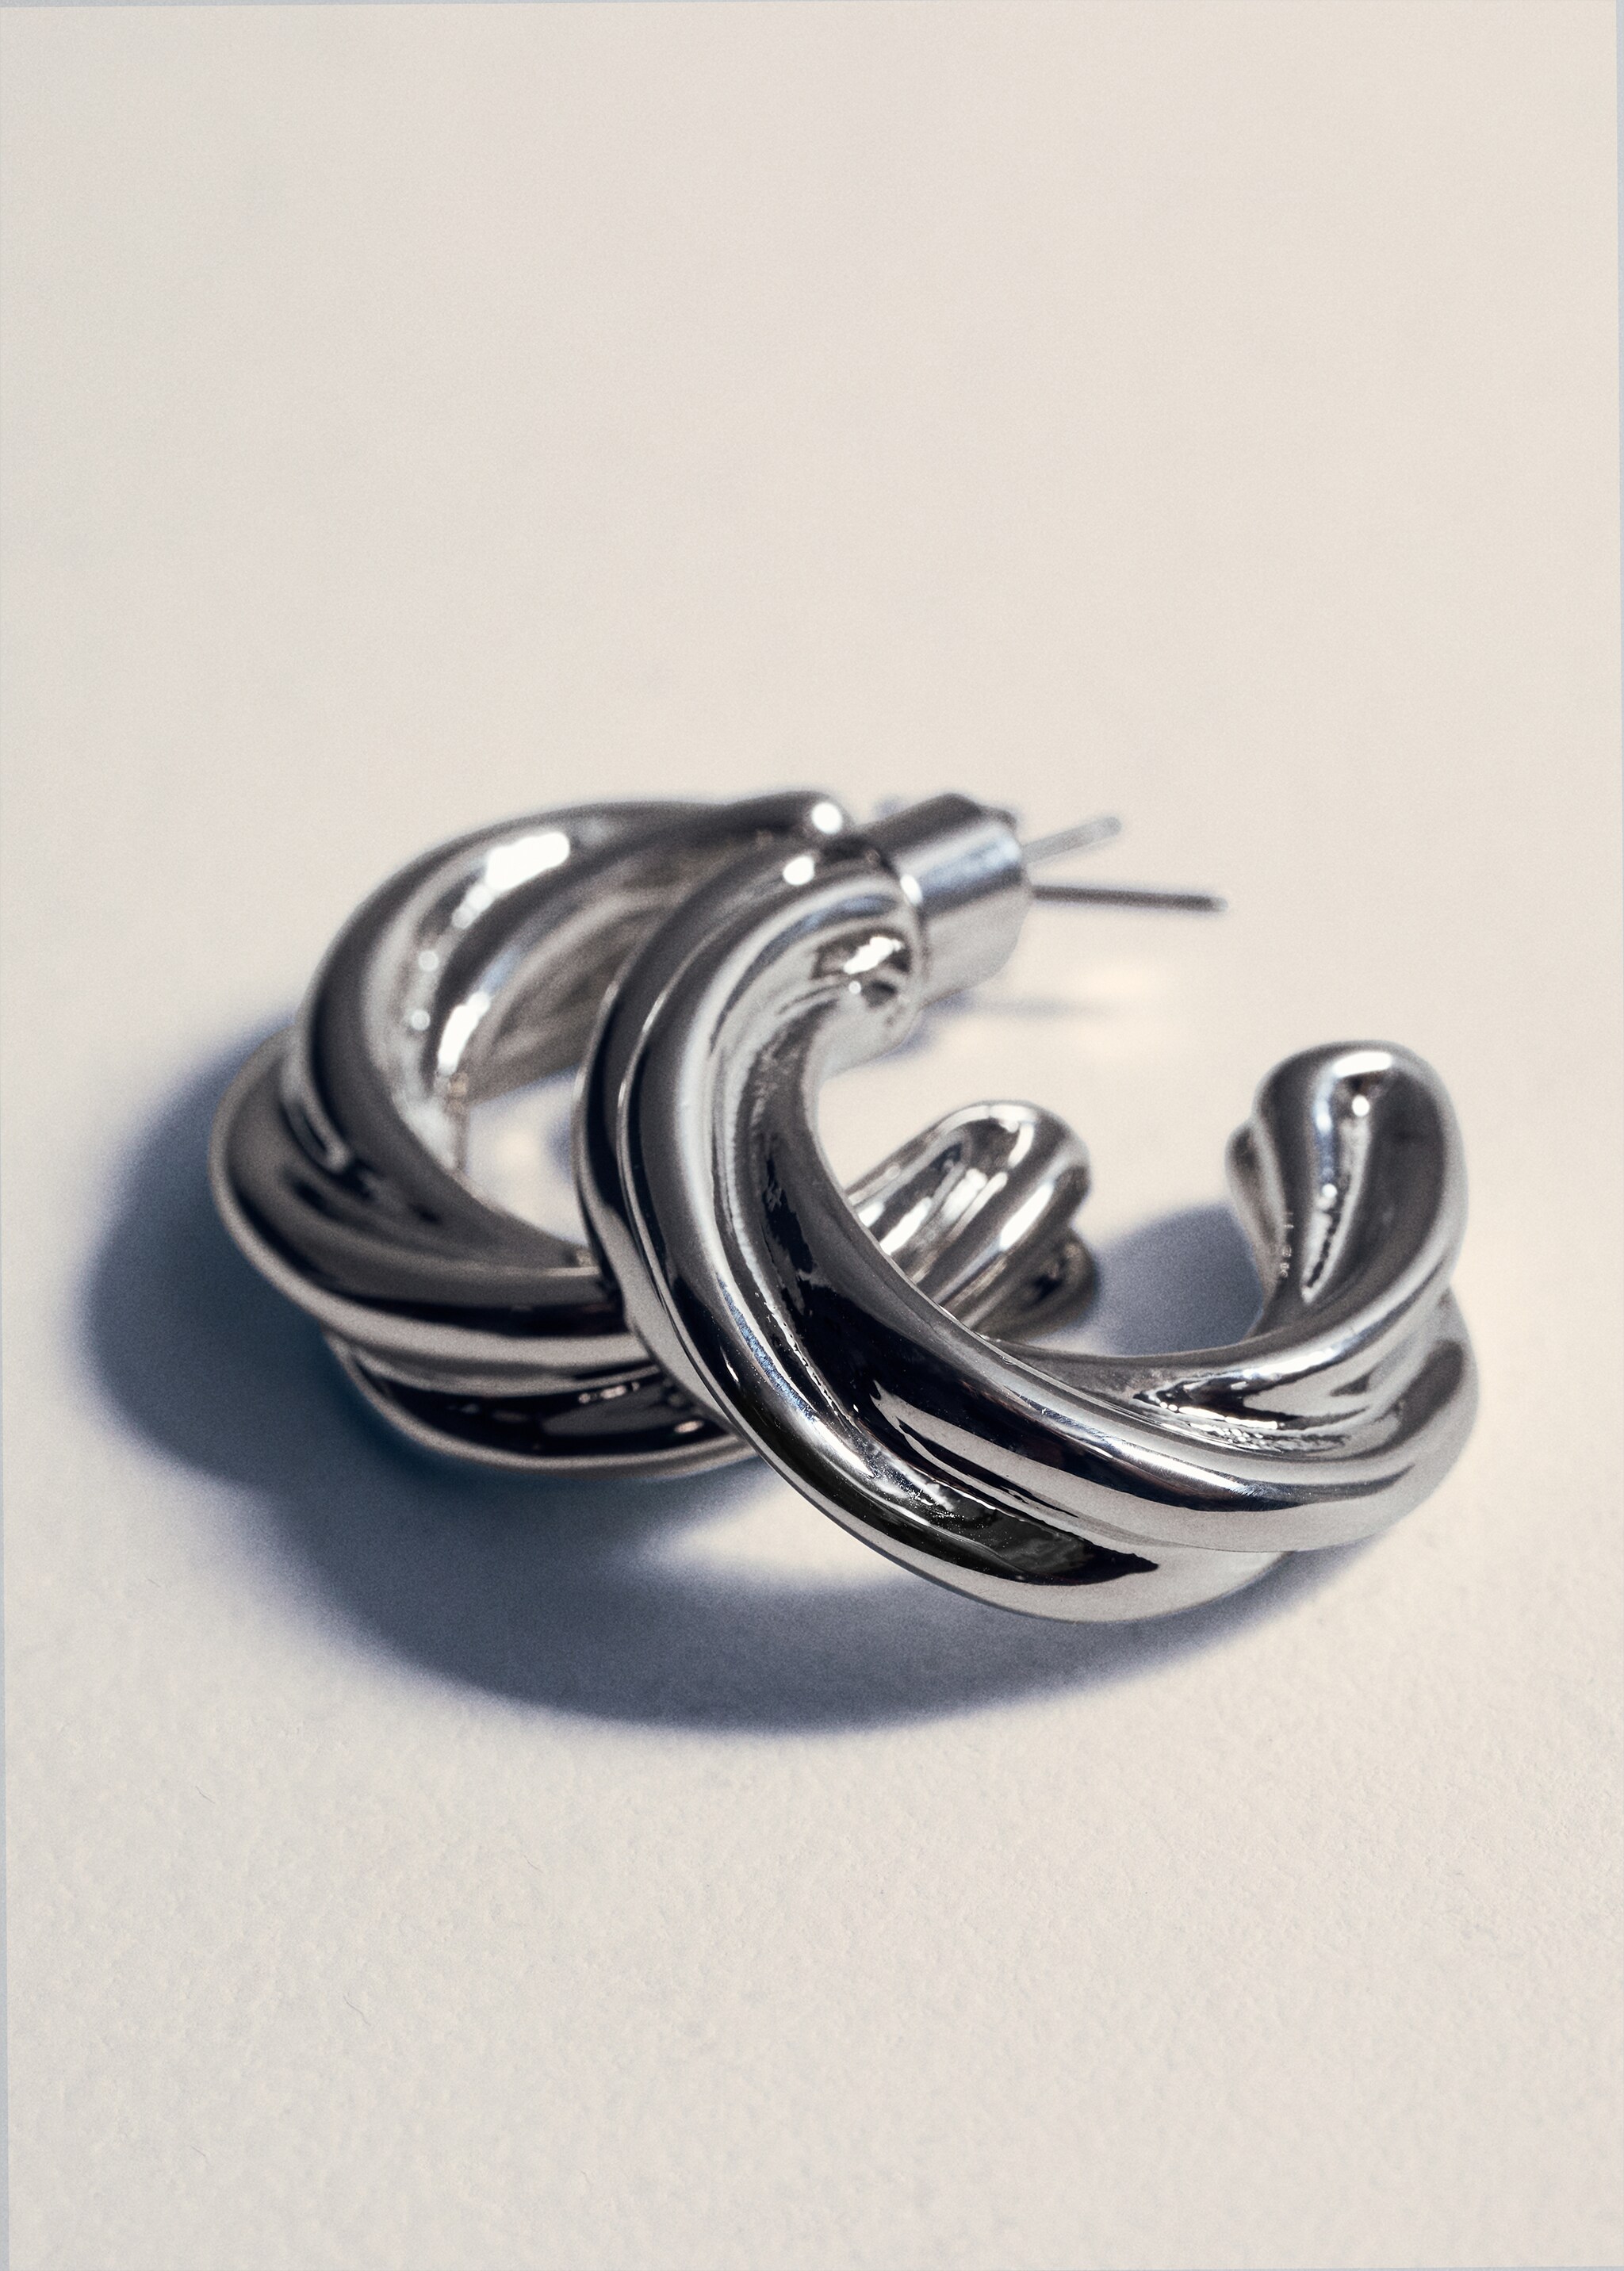 Intertwined hoop earrings - Details of the article 5